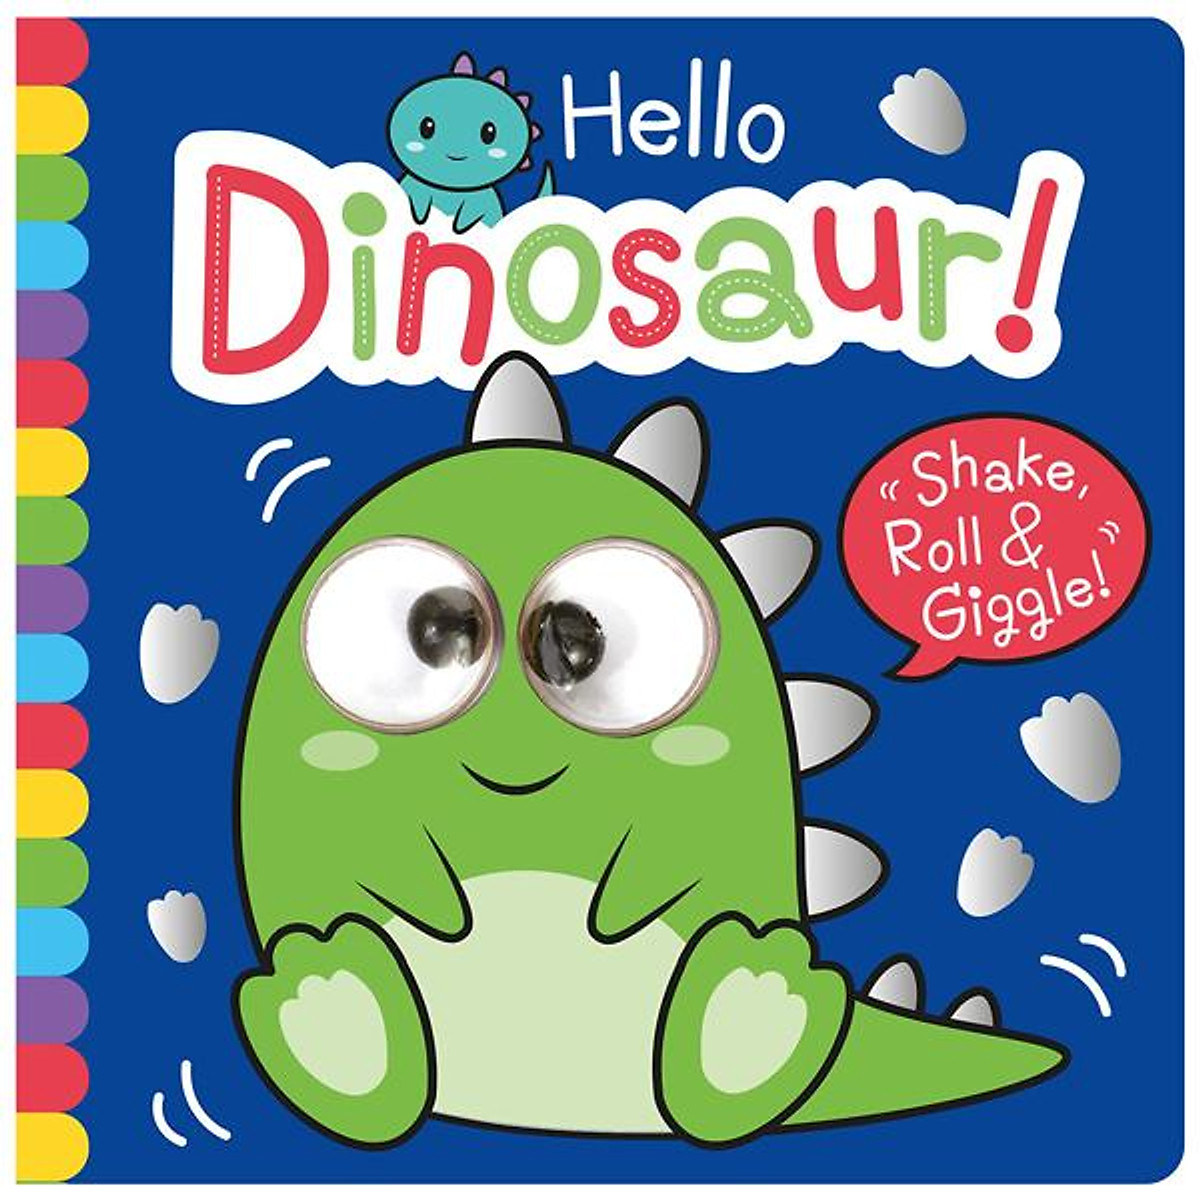 Hello Dinosaur! (Shake, Roll & Giggle Books)